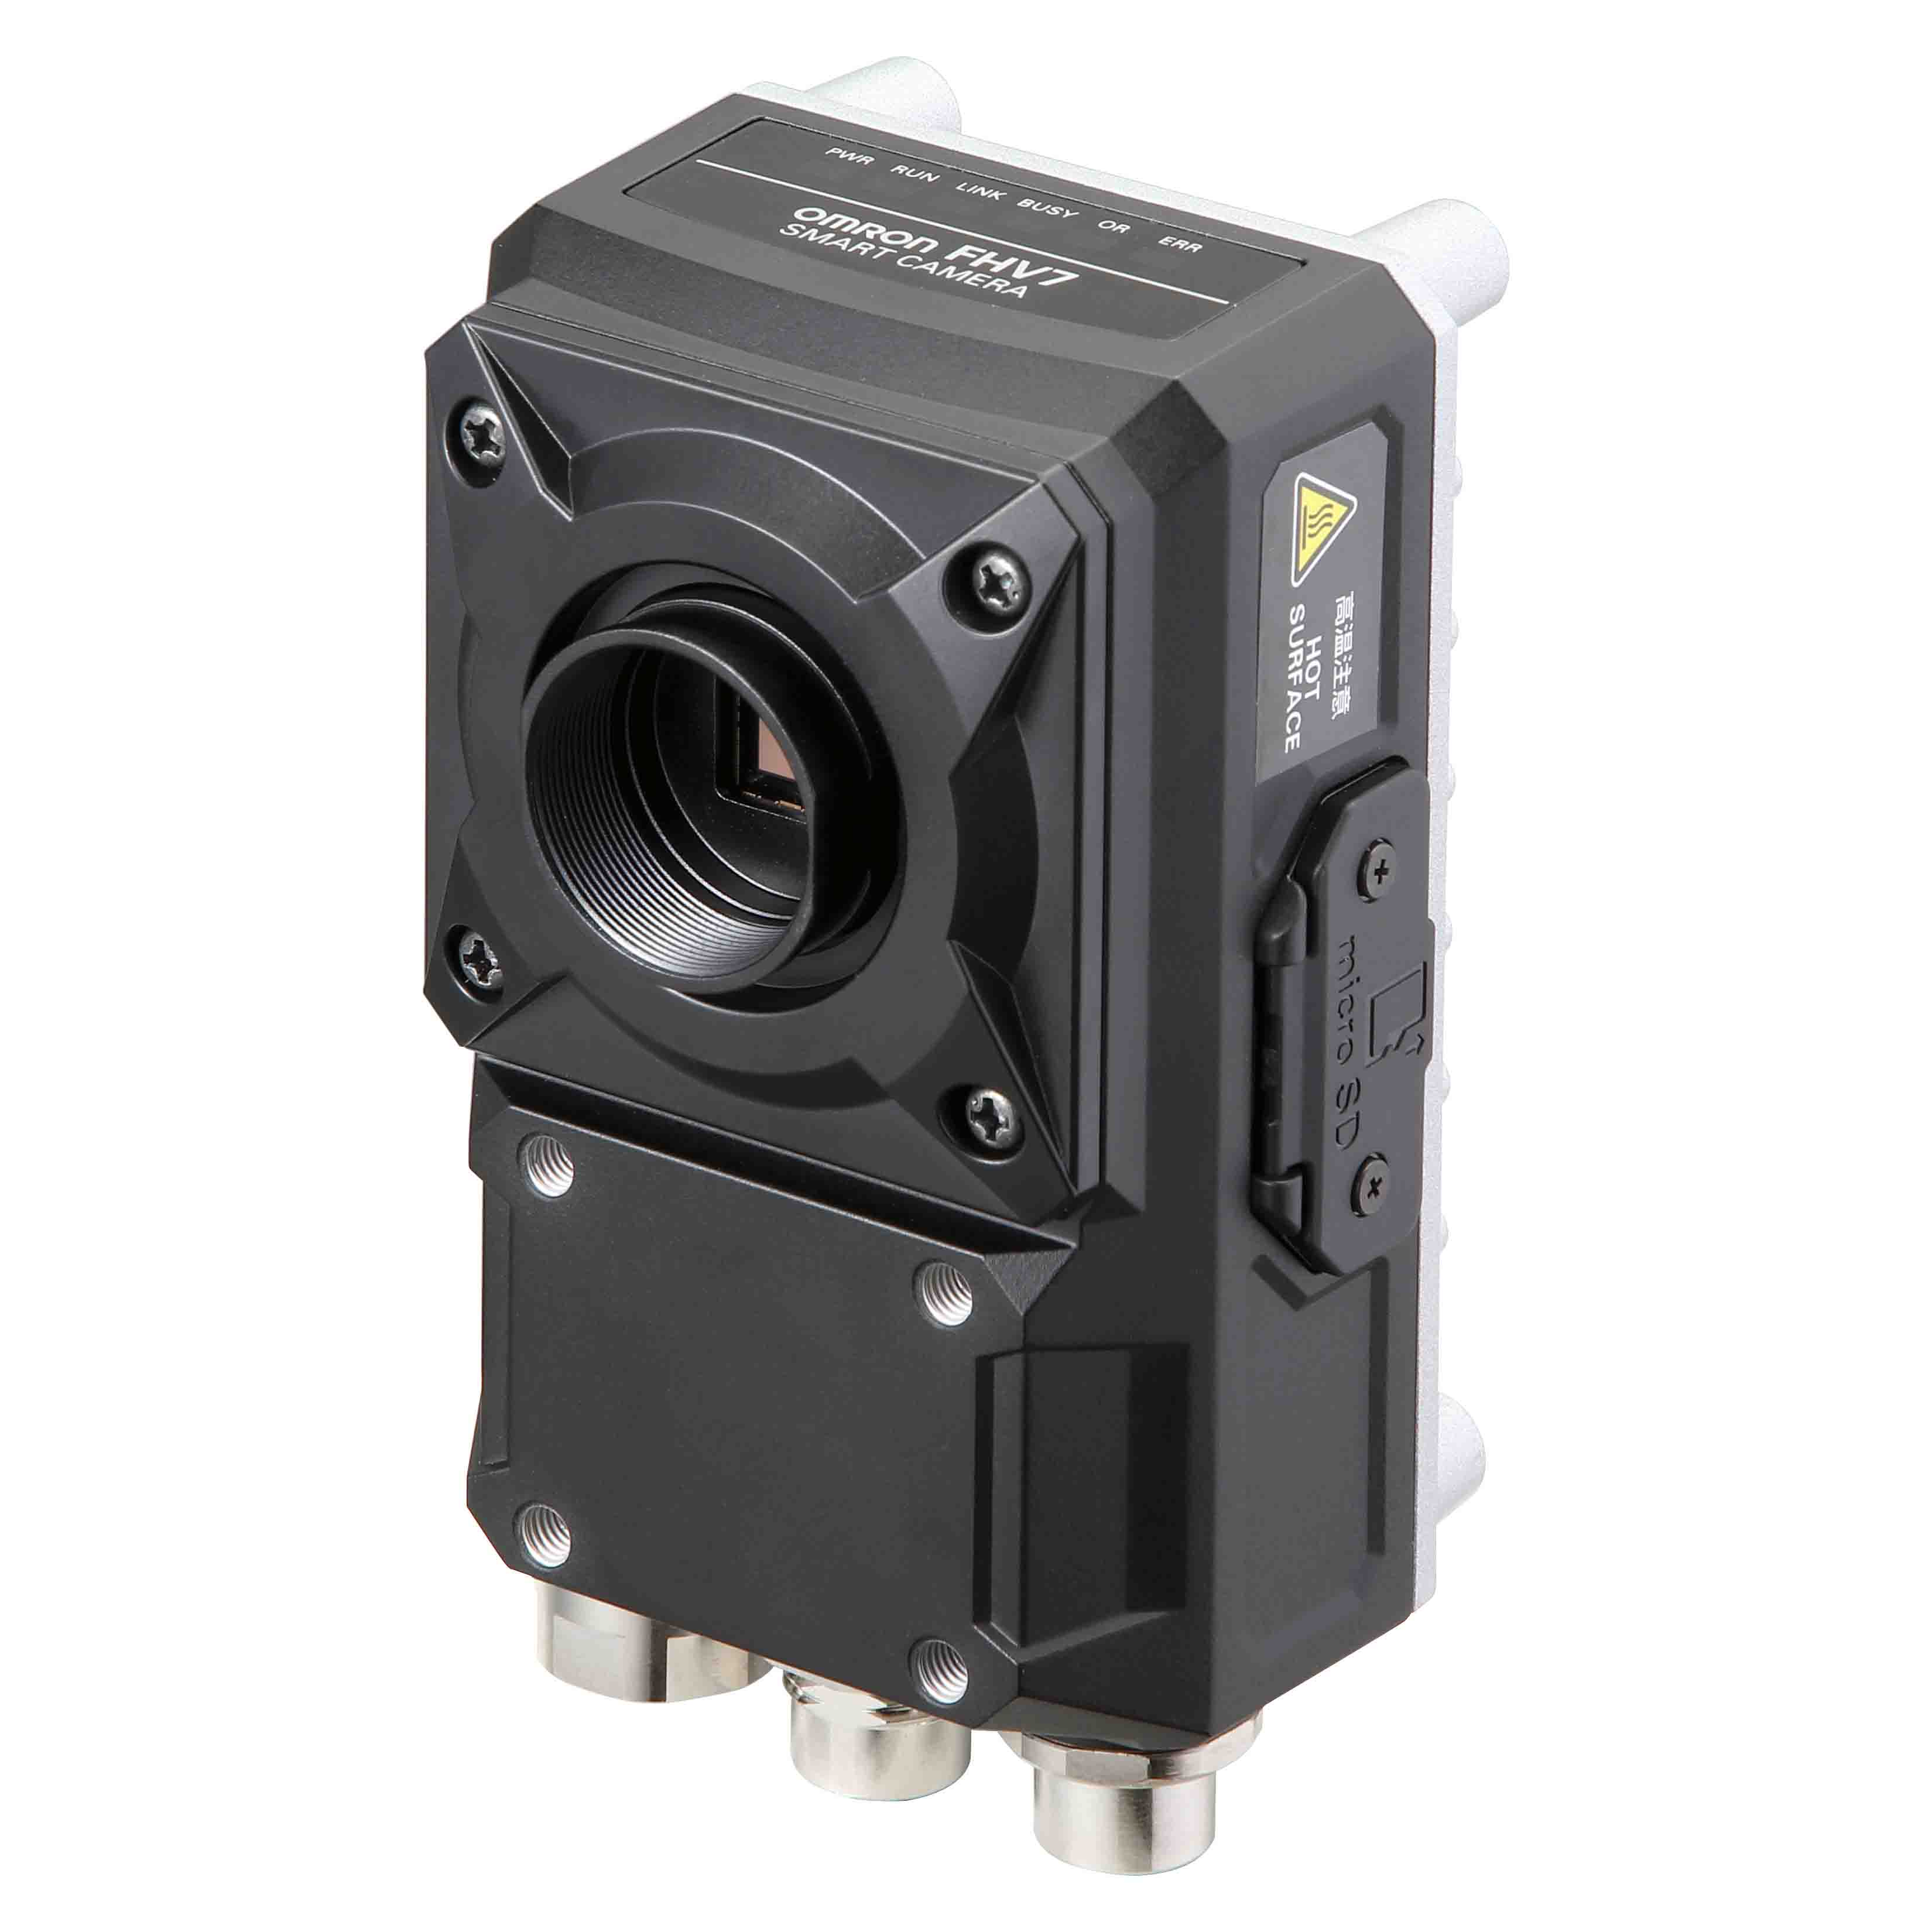 Omron Inspection Camera, 3.2 Millionpixels Resolution, LED Illumination